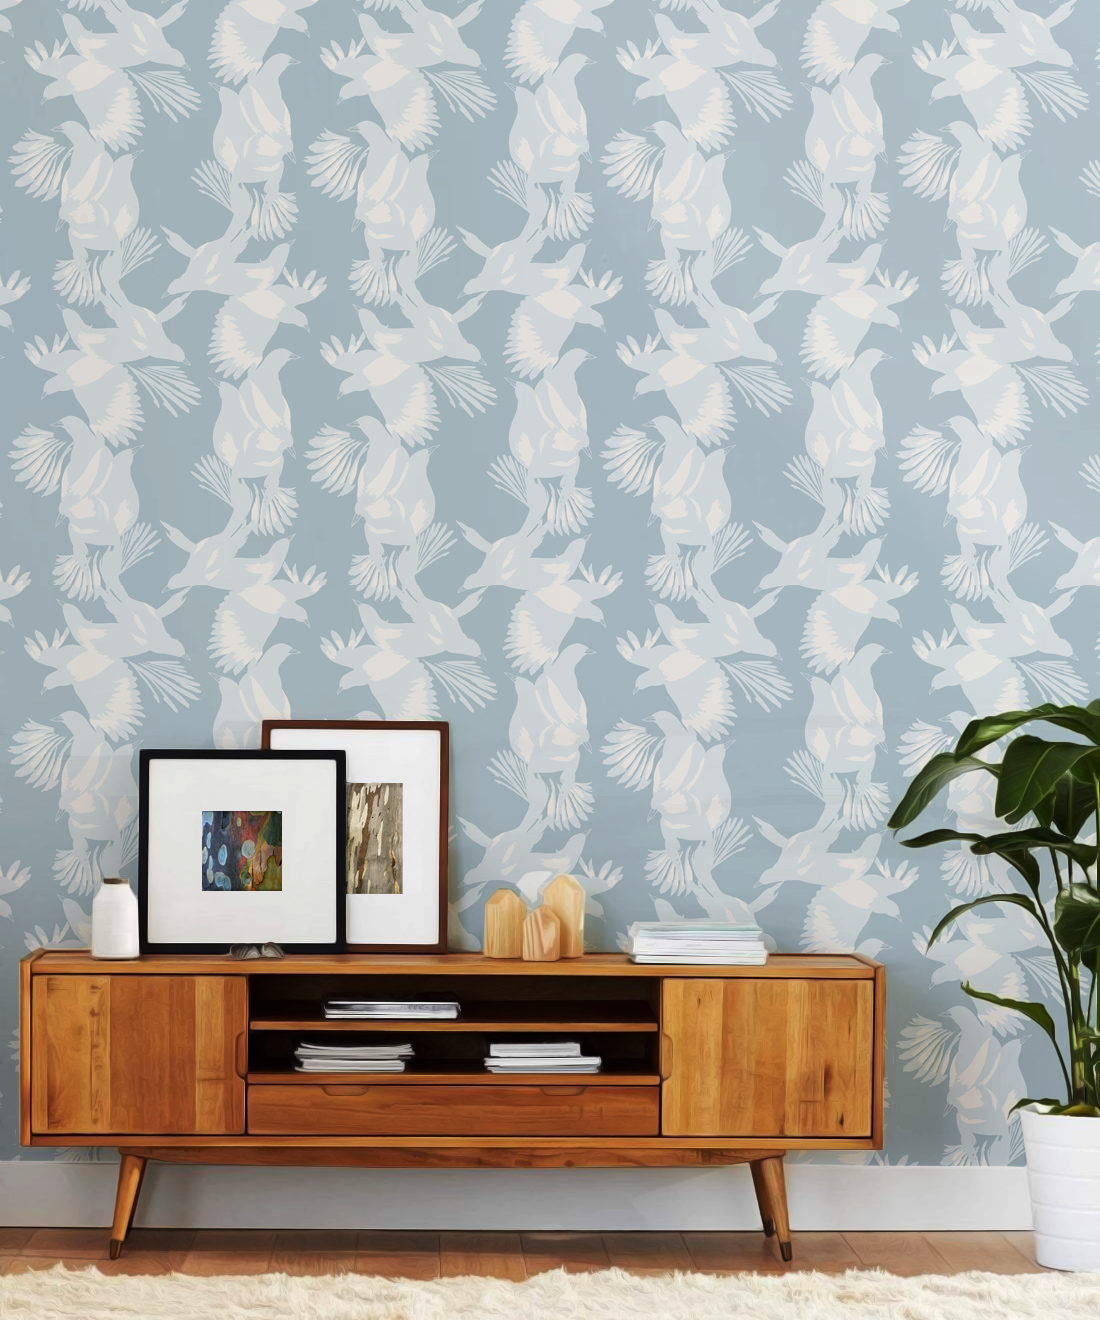 Magpie Wallpaper - Milton & King - Kingdom Home - Papel pintado Pájaro - Azul Bell Insitu